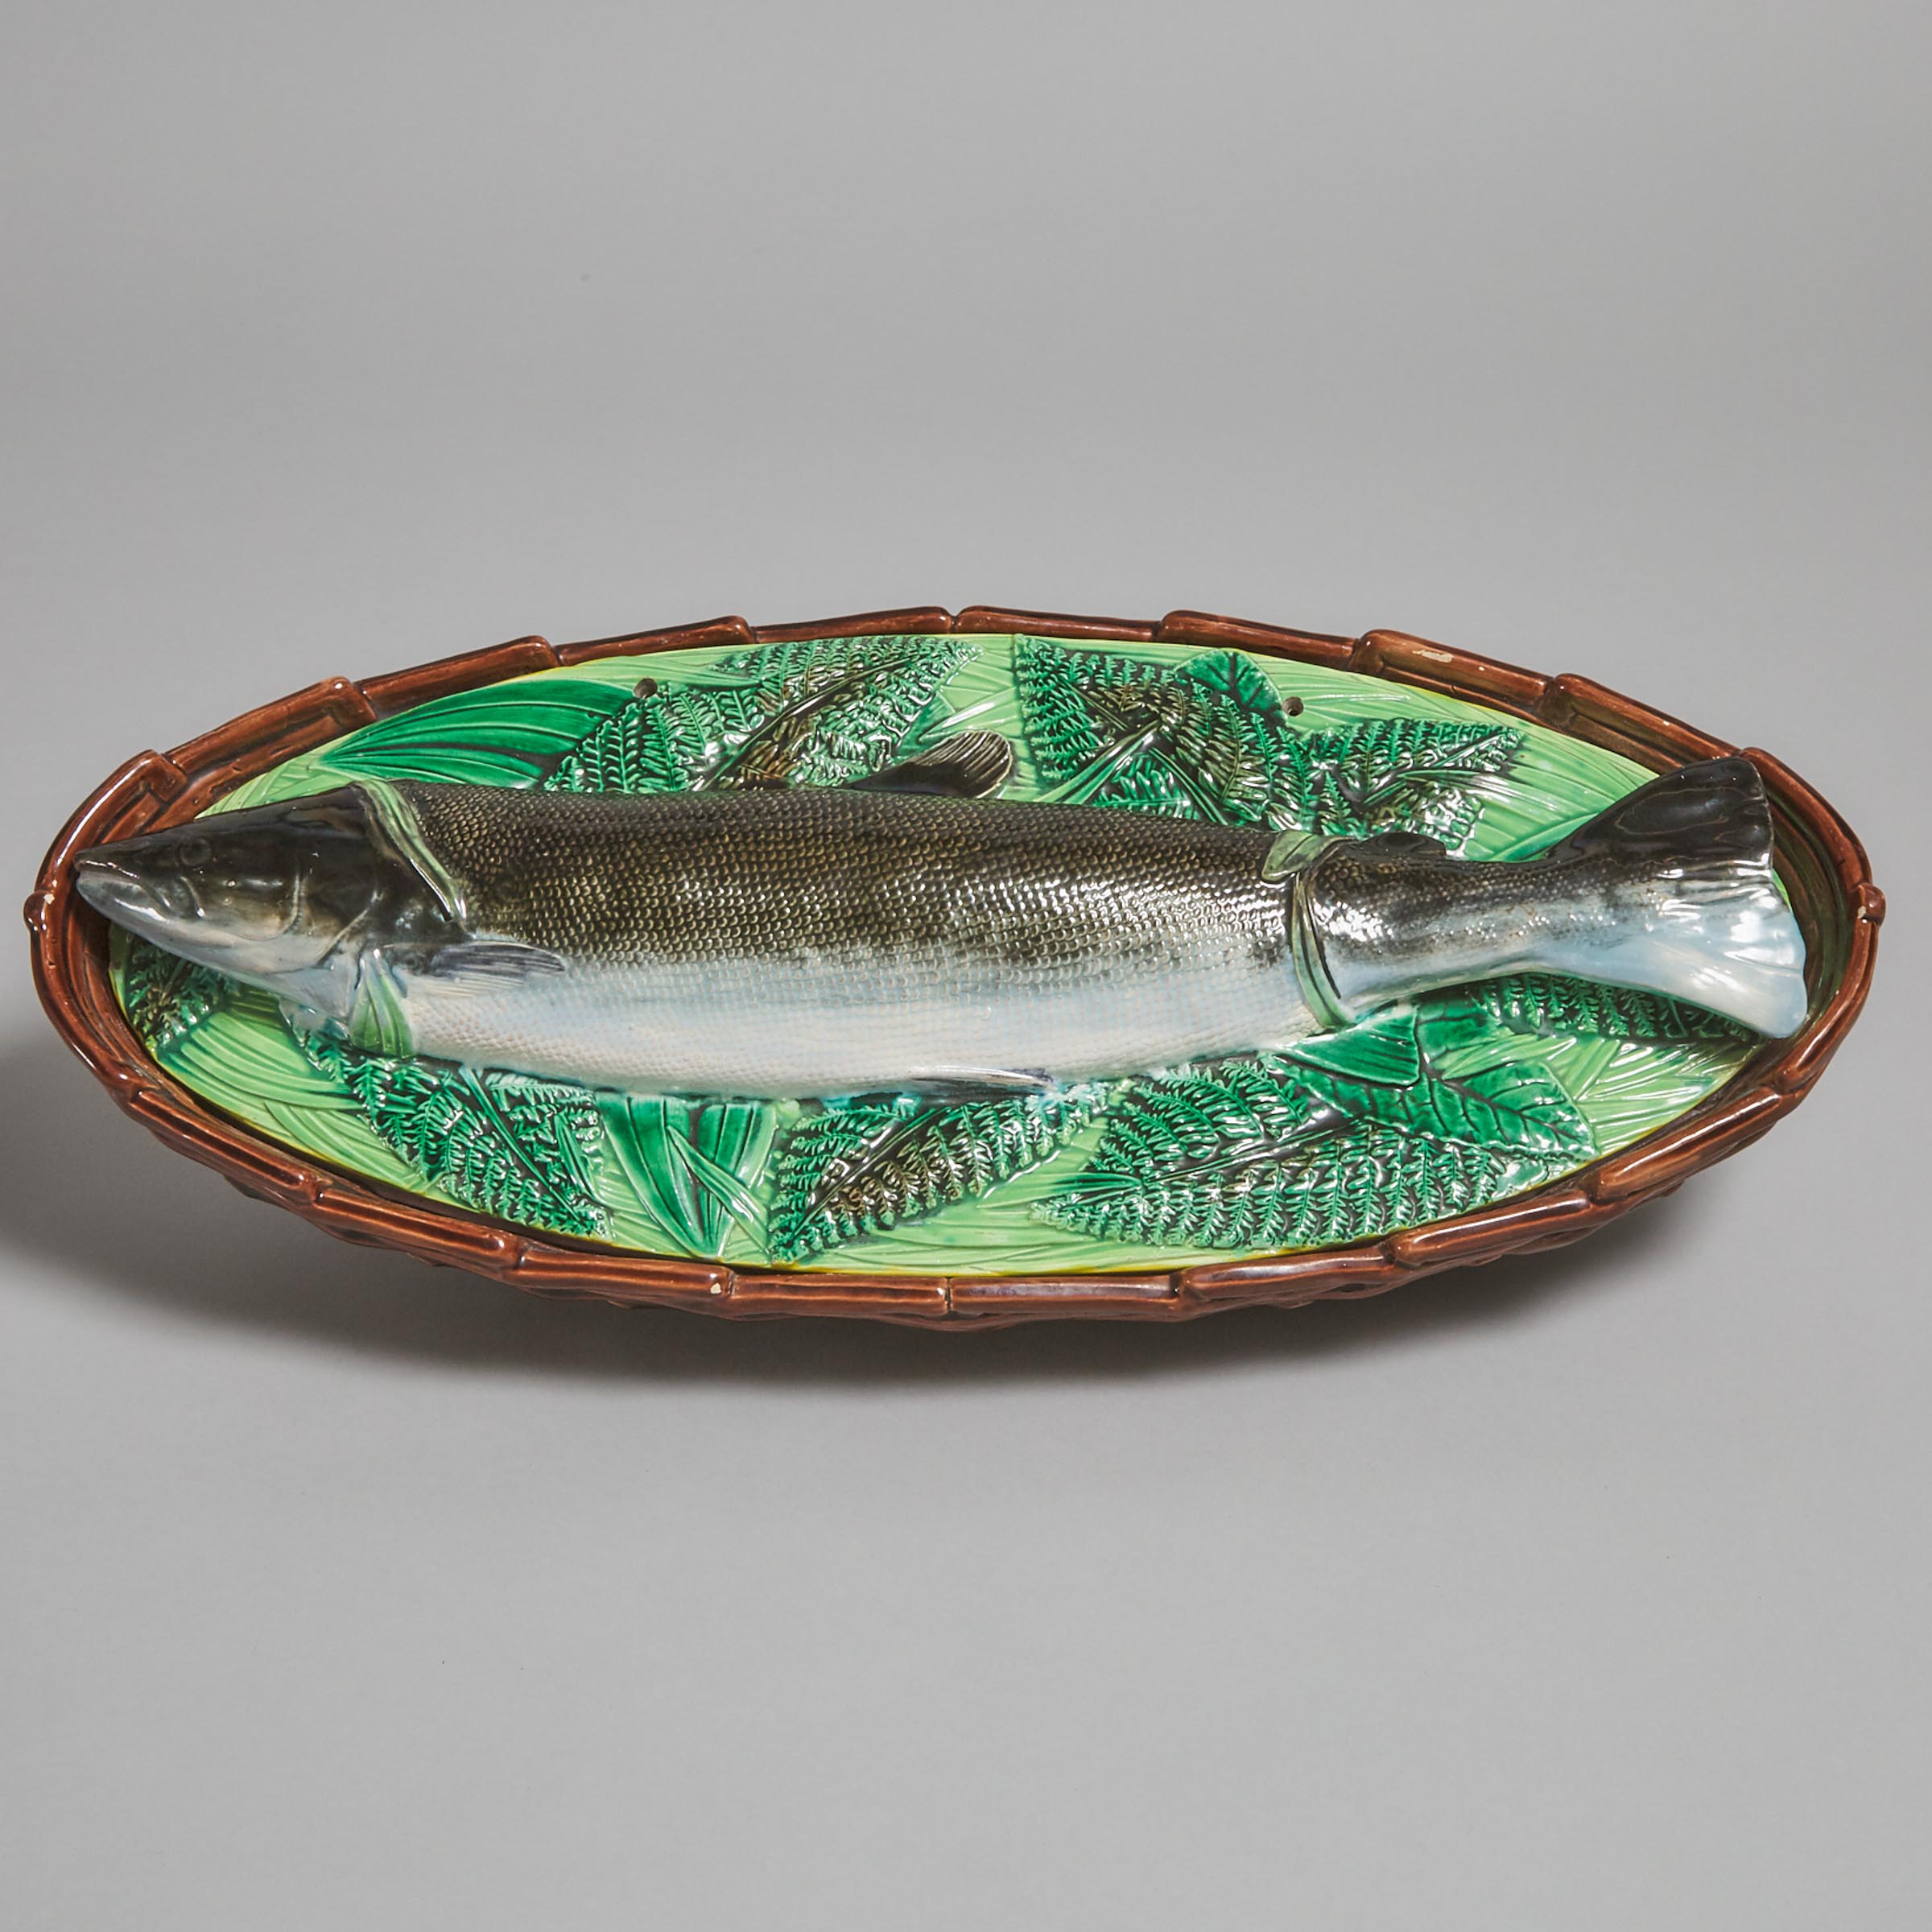 George Jones Majolica Oval Fish Dish and Cover, c.1875